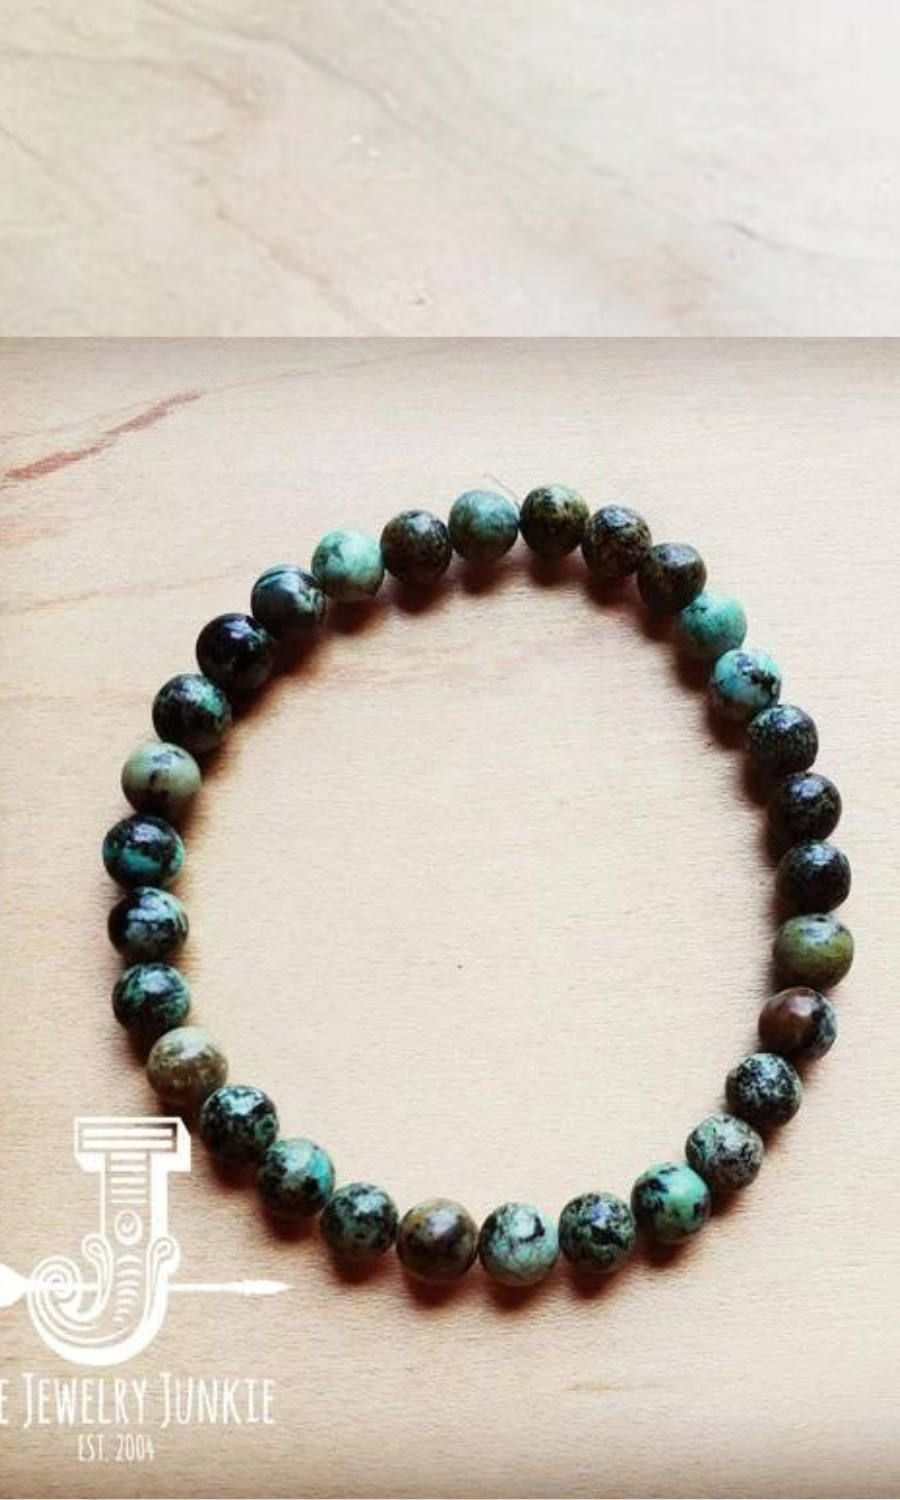 Black African Turquoise Bead Bracelet